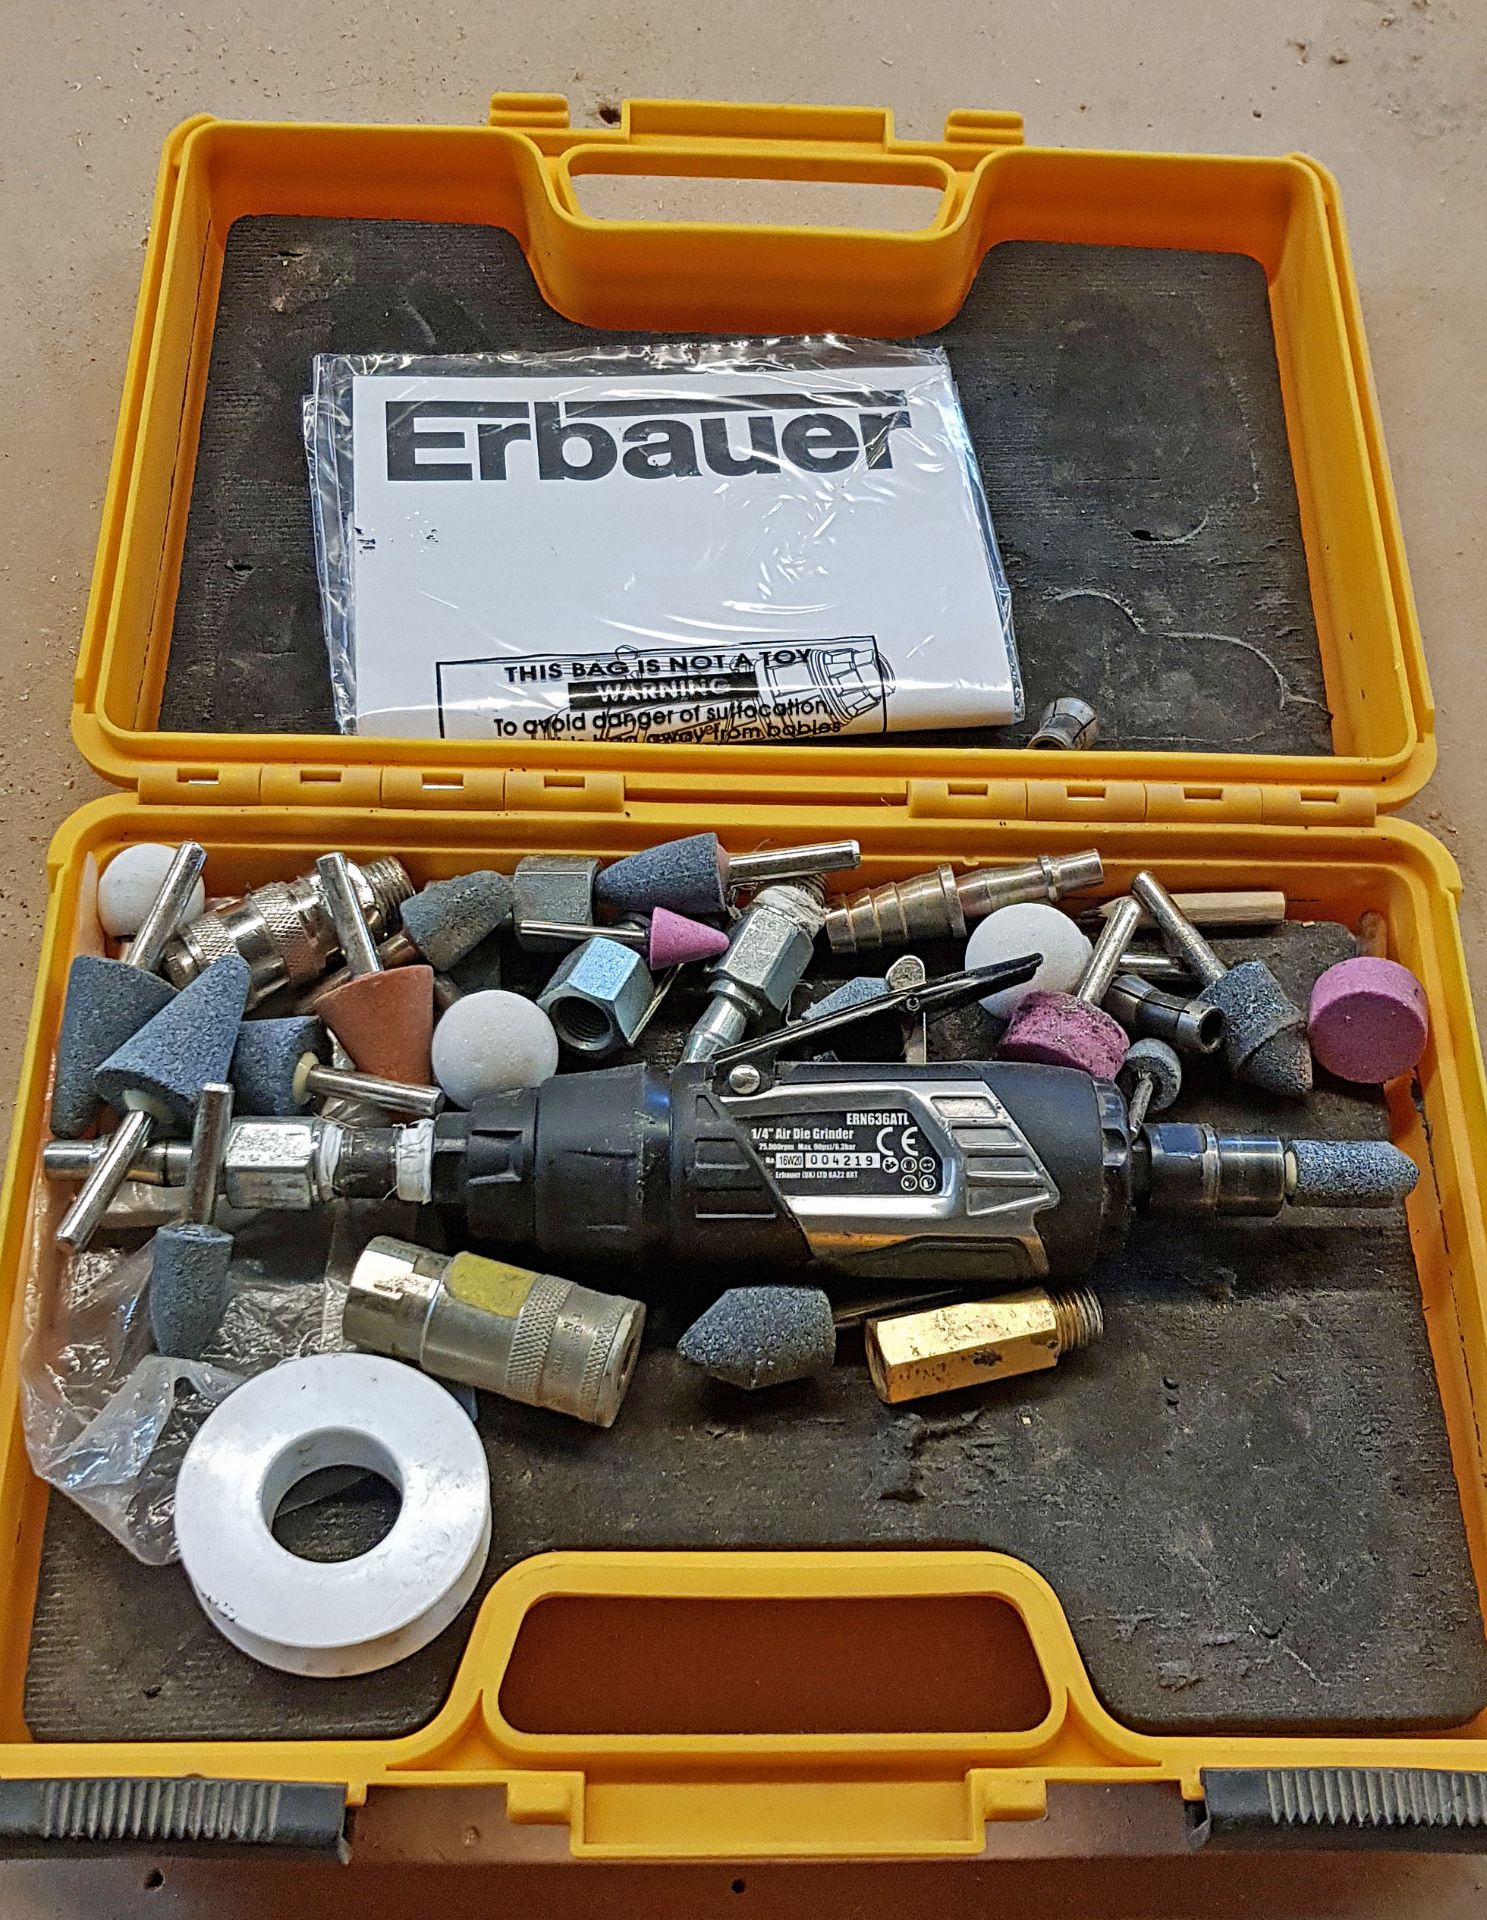 An ERBAUER ERN636ATL Pneumatic Quarter inch Die Grinder in Plastic Carry Case